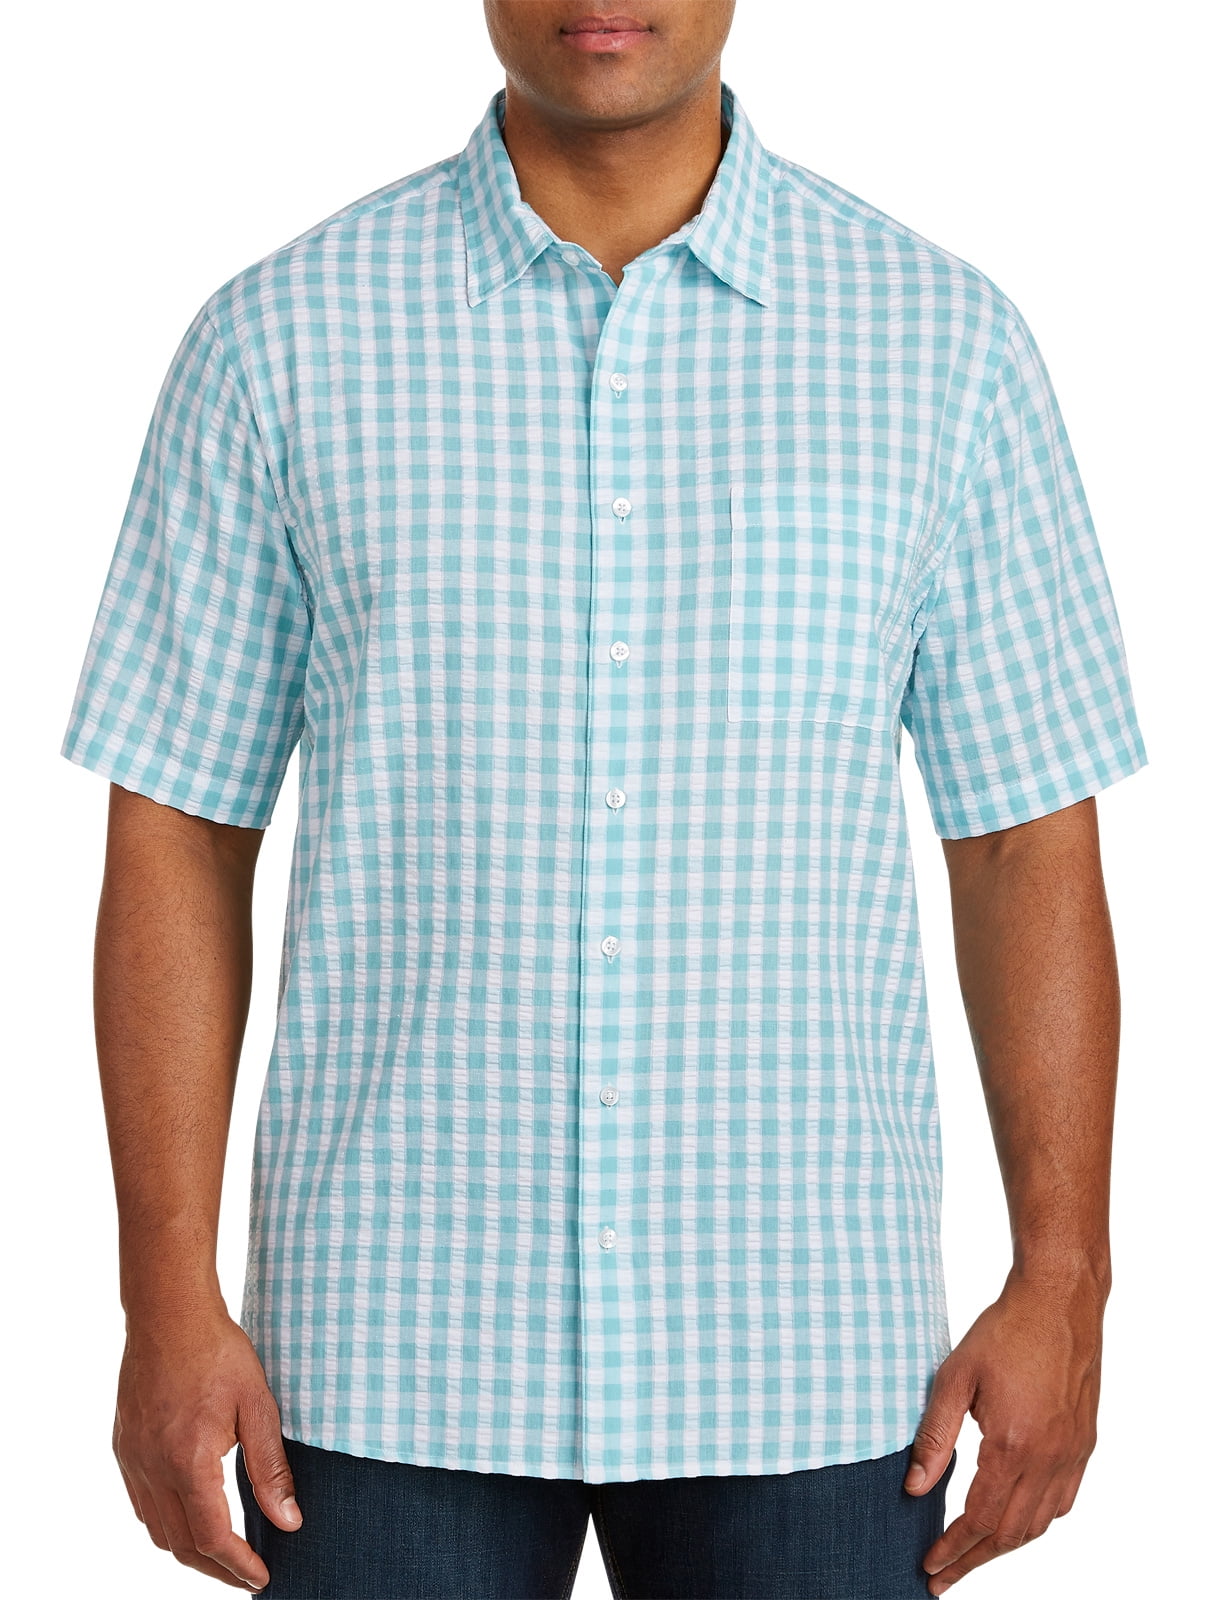 designteam-eh: Harbor Bay Dress Shirts